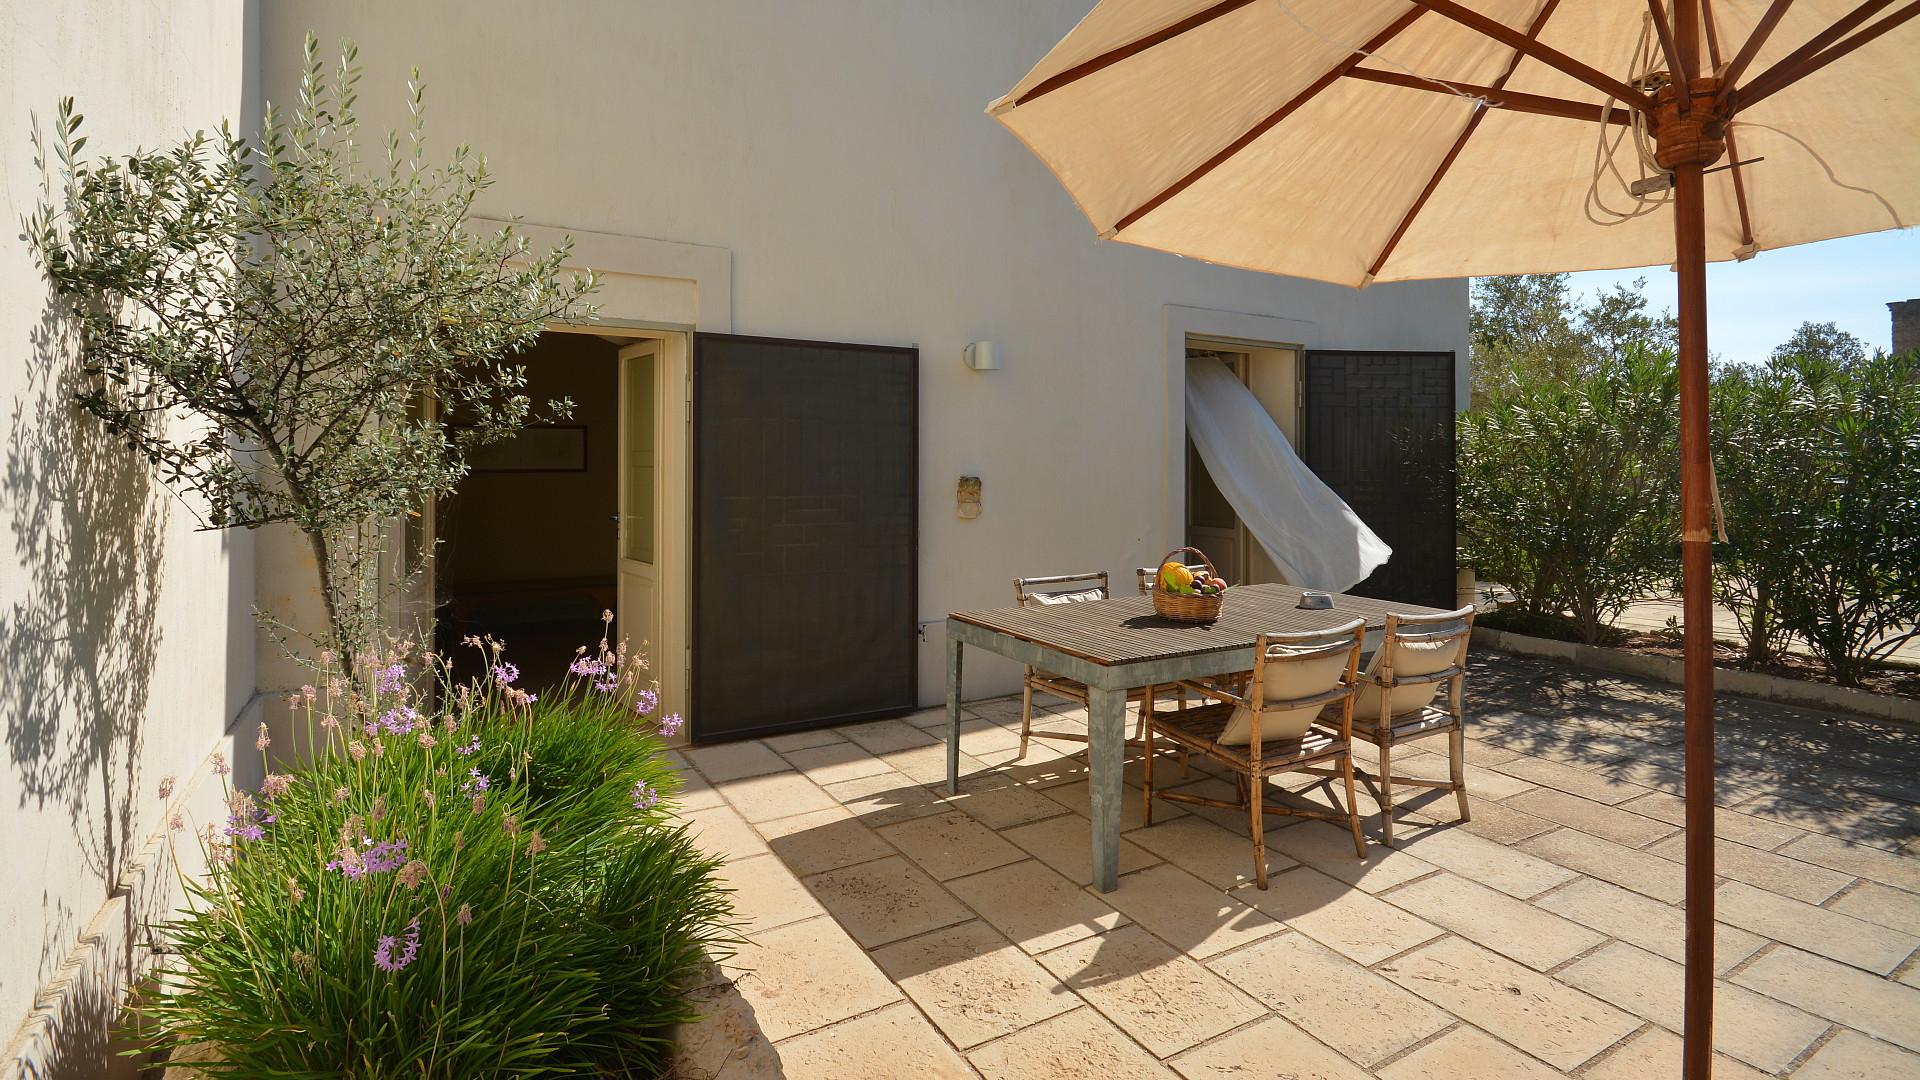 Suite Sale & Verande - equipped outdoor area